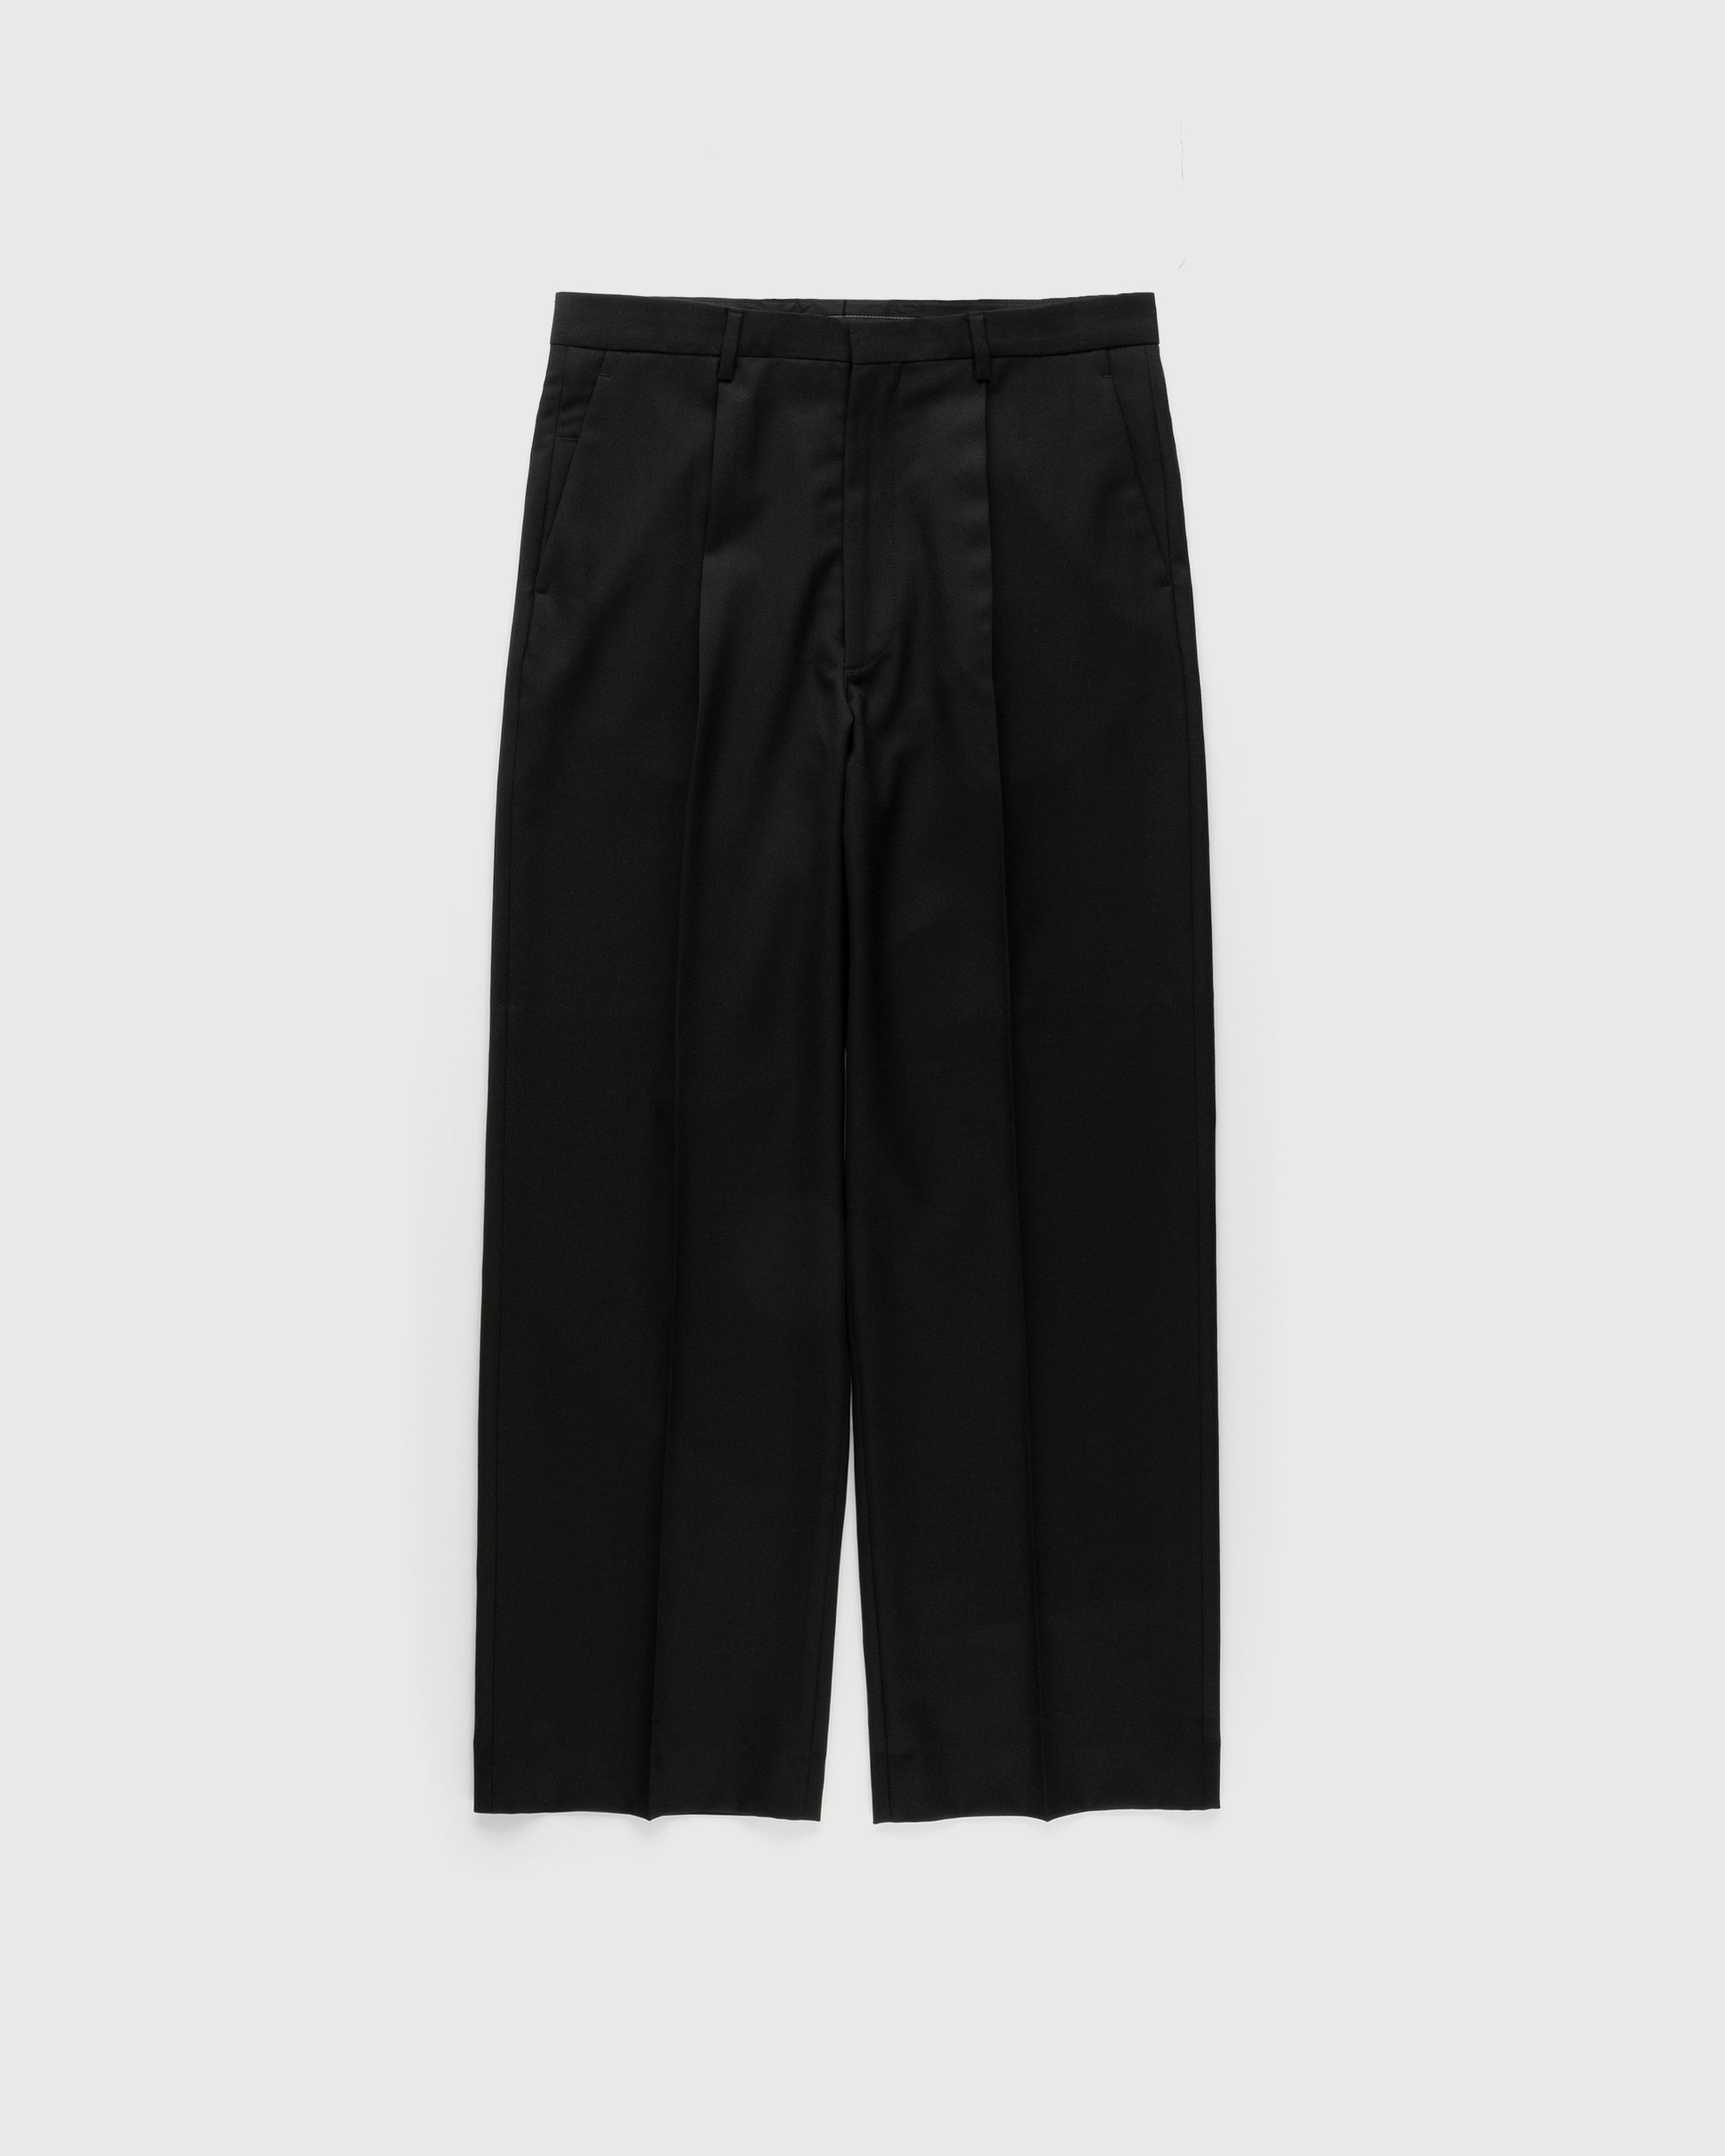 Highsnobiety – Wool Dress Pant Black - Trousers - Black - Image 1